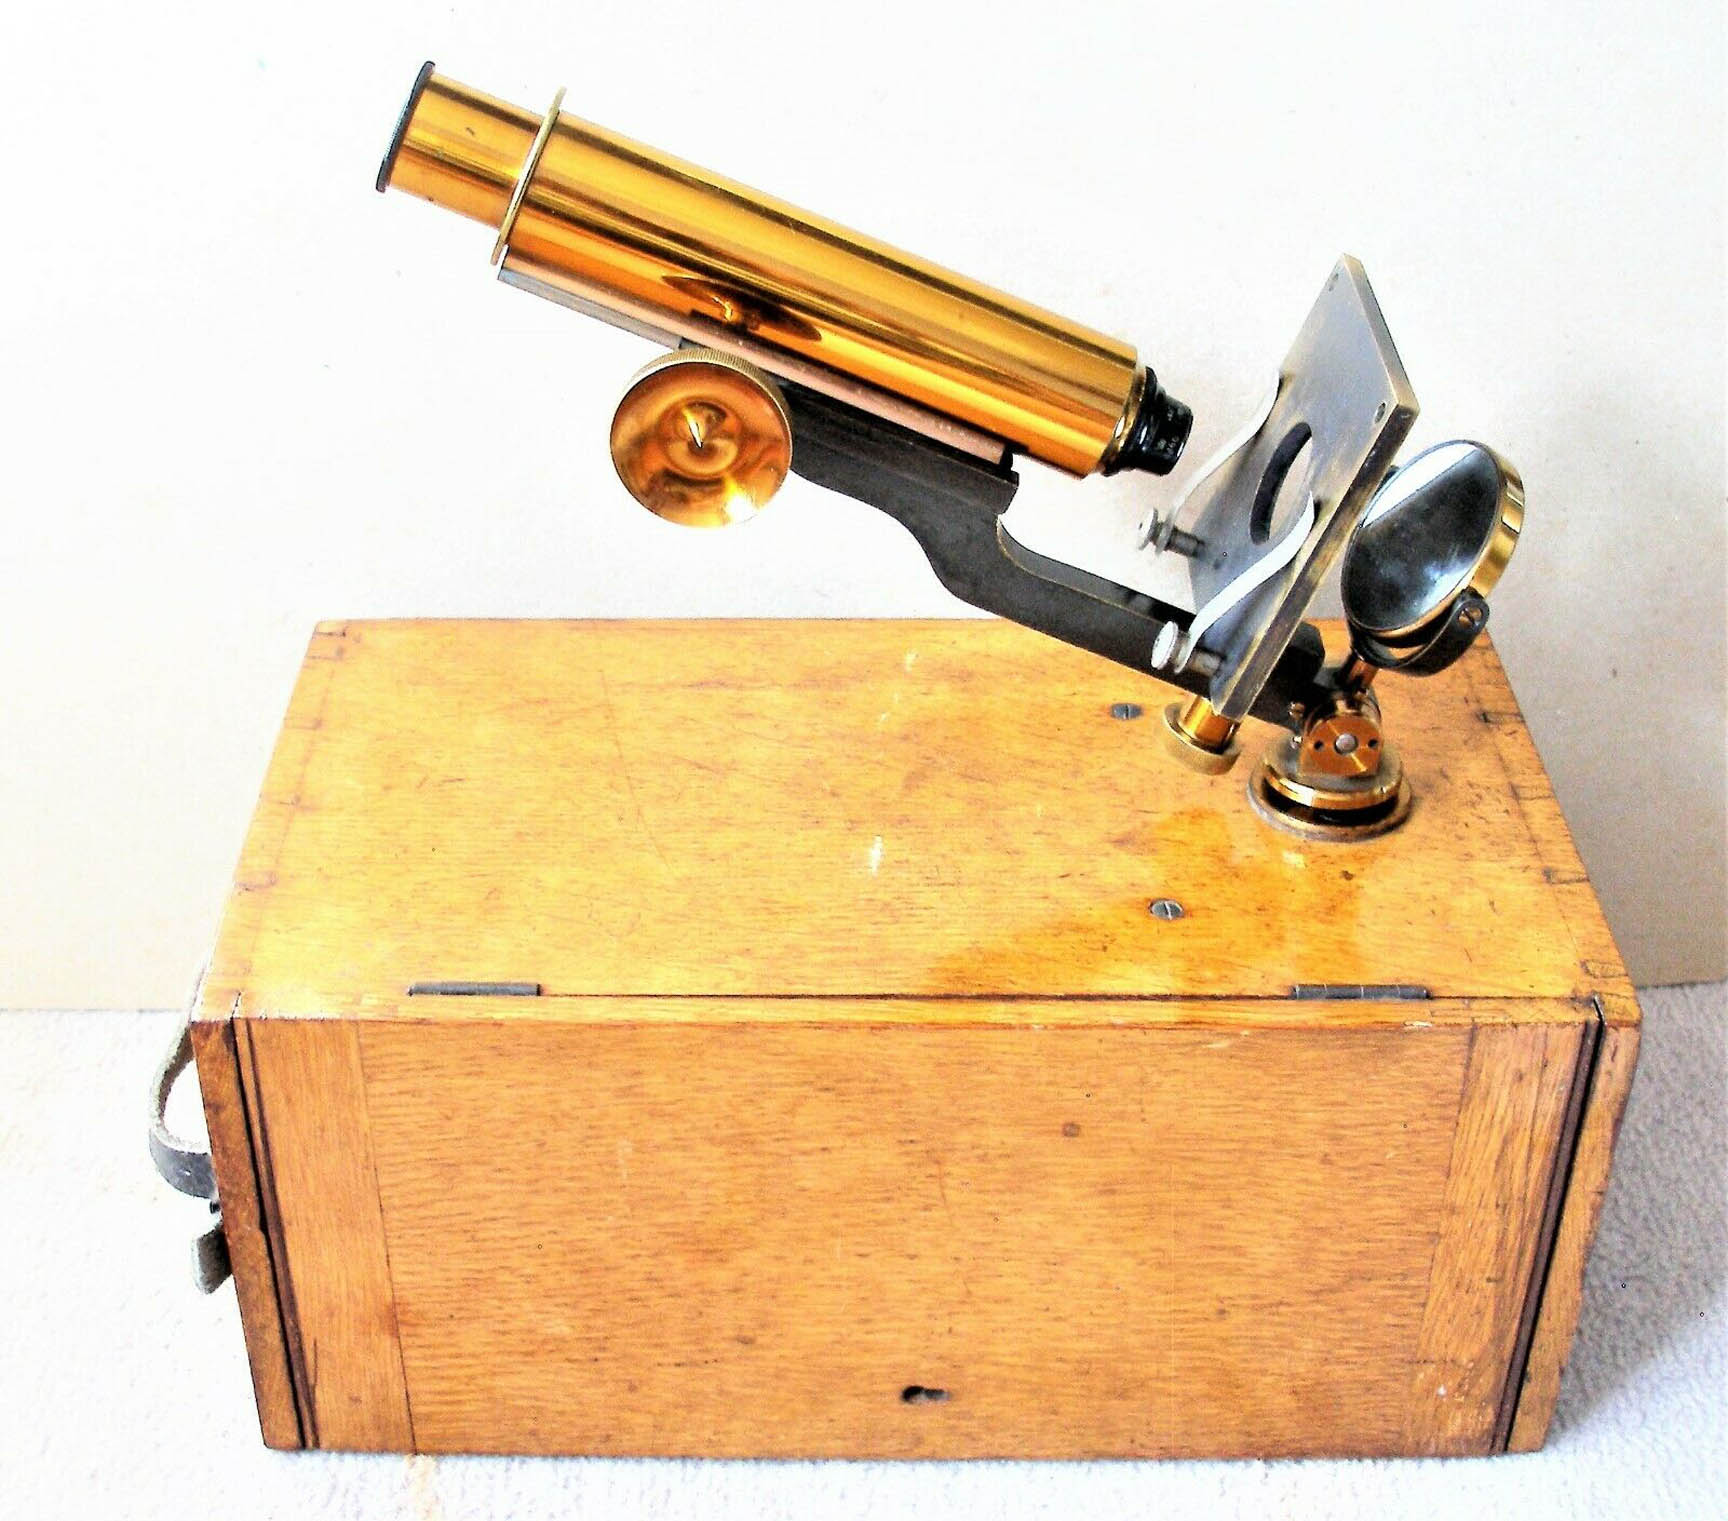  Watson Naturalist microscope